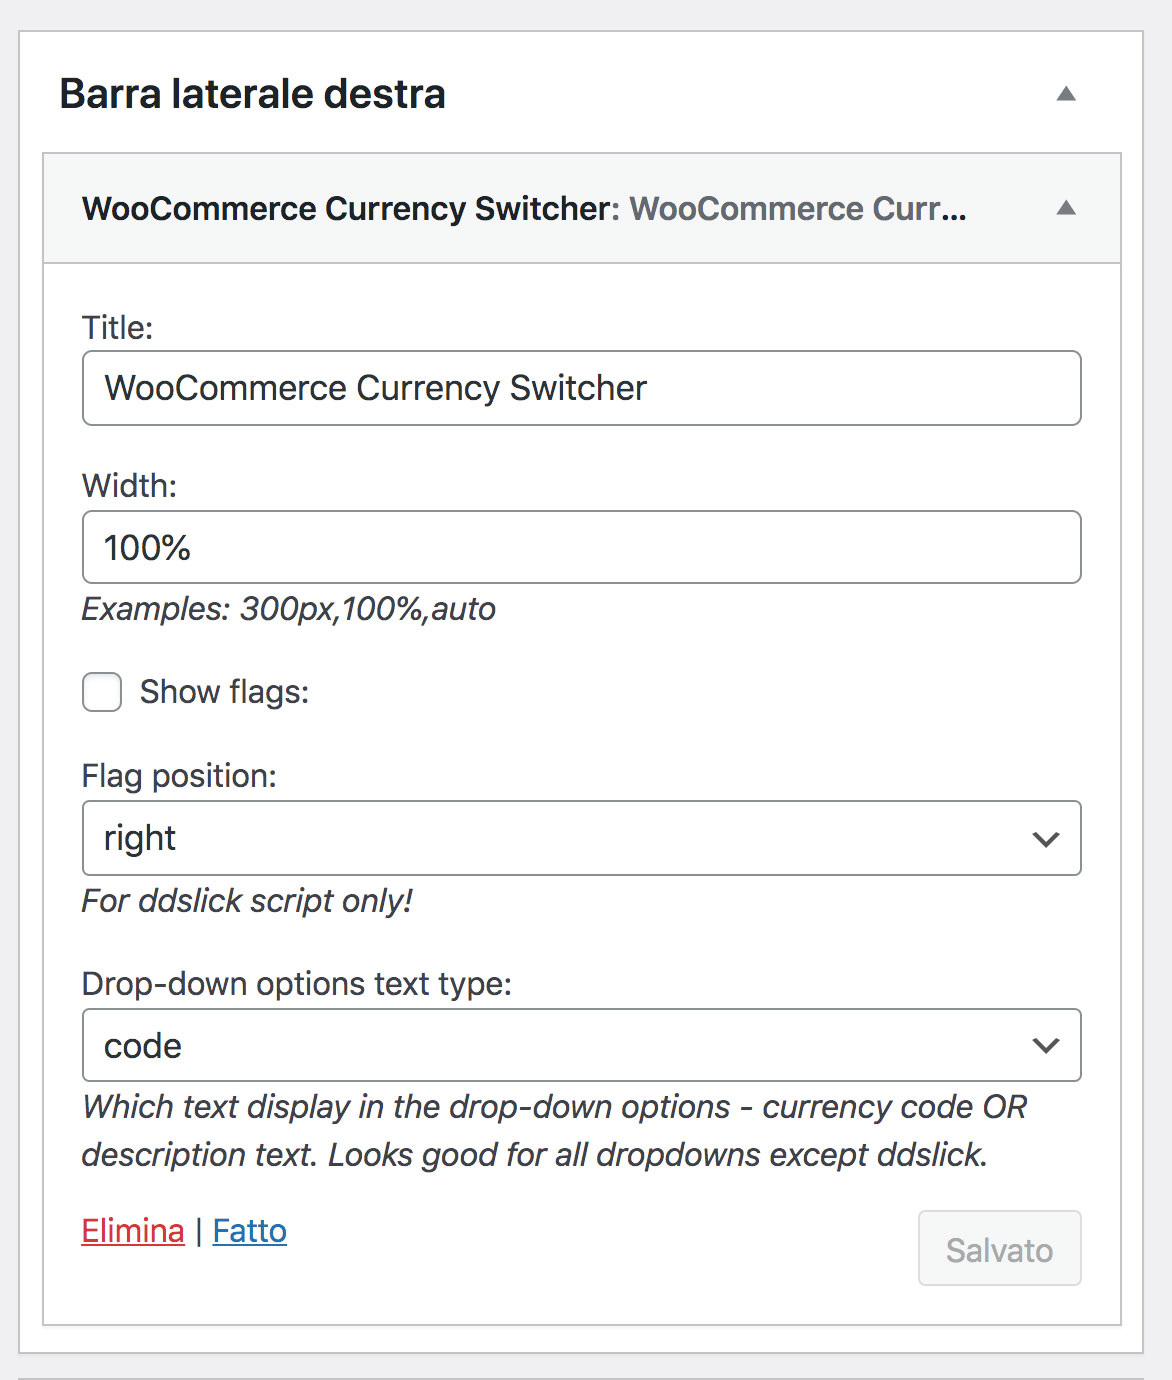 il widget del currency switcher di WooCommerce